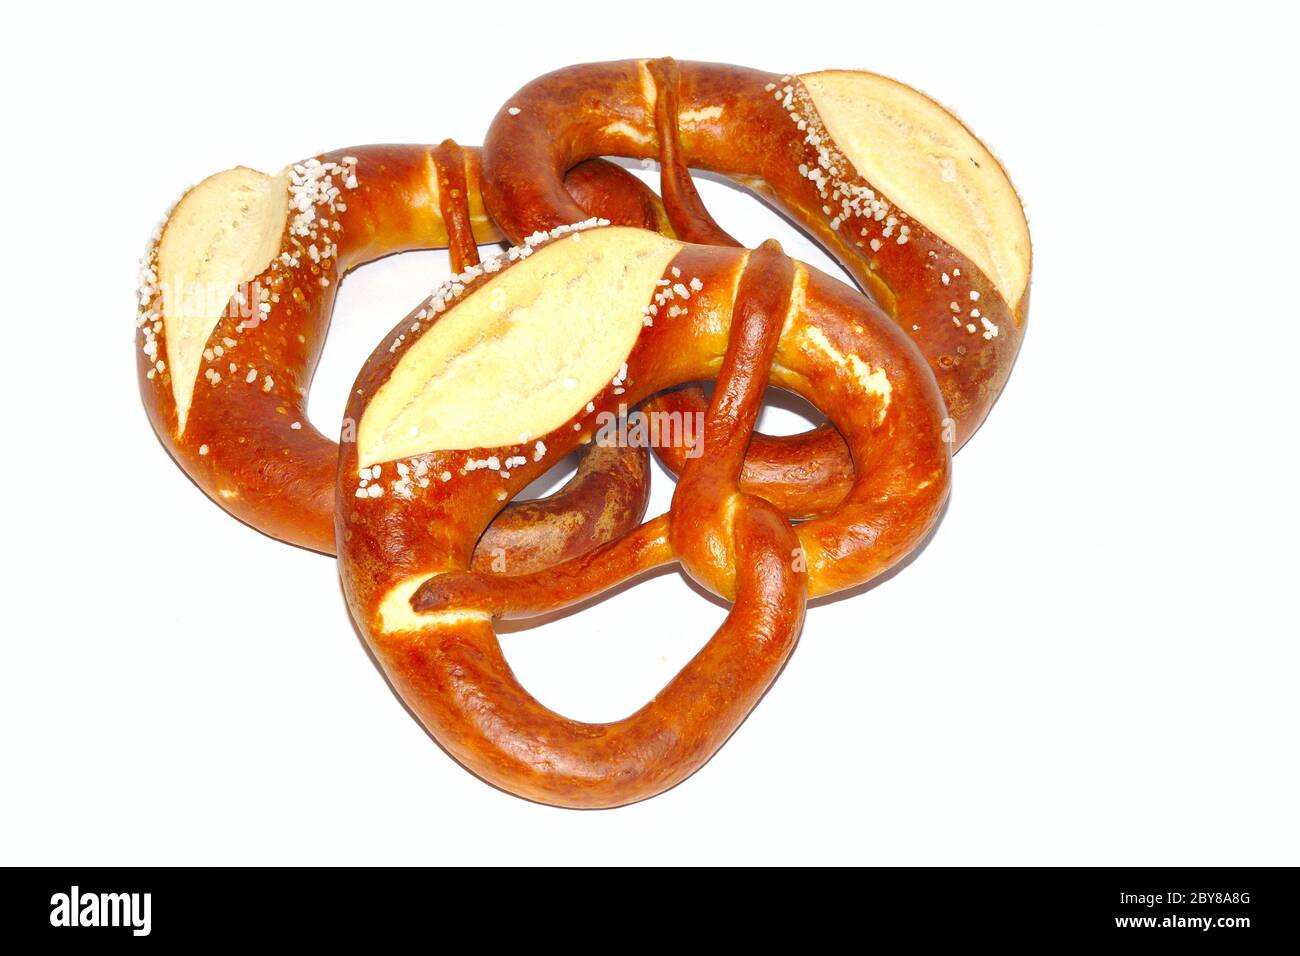 Bavarian pretzels Stock Photo